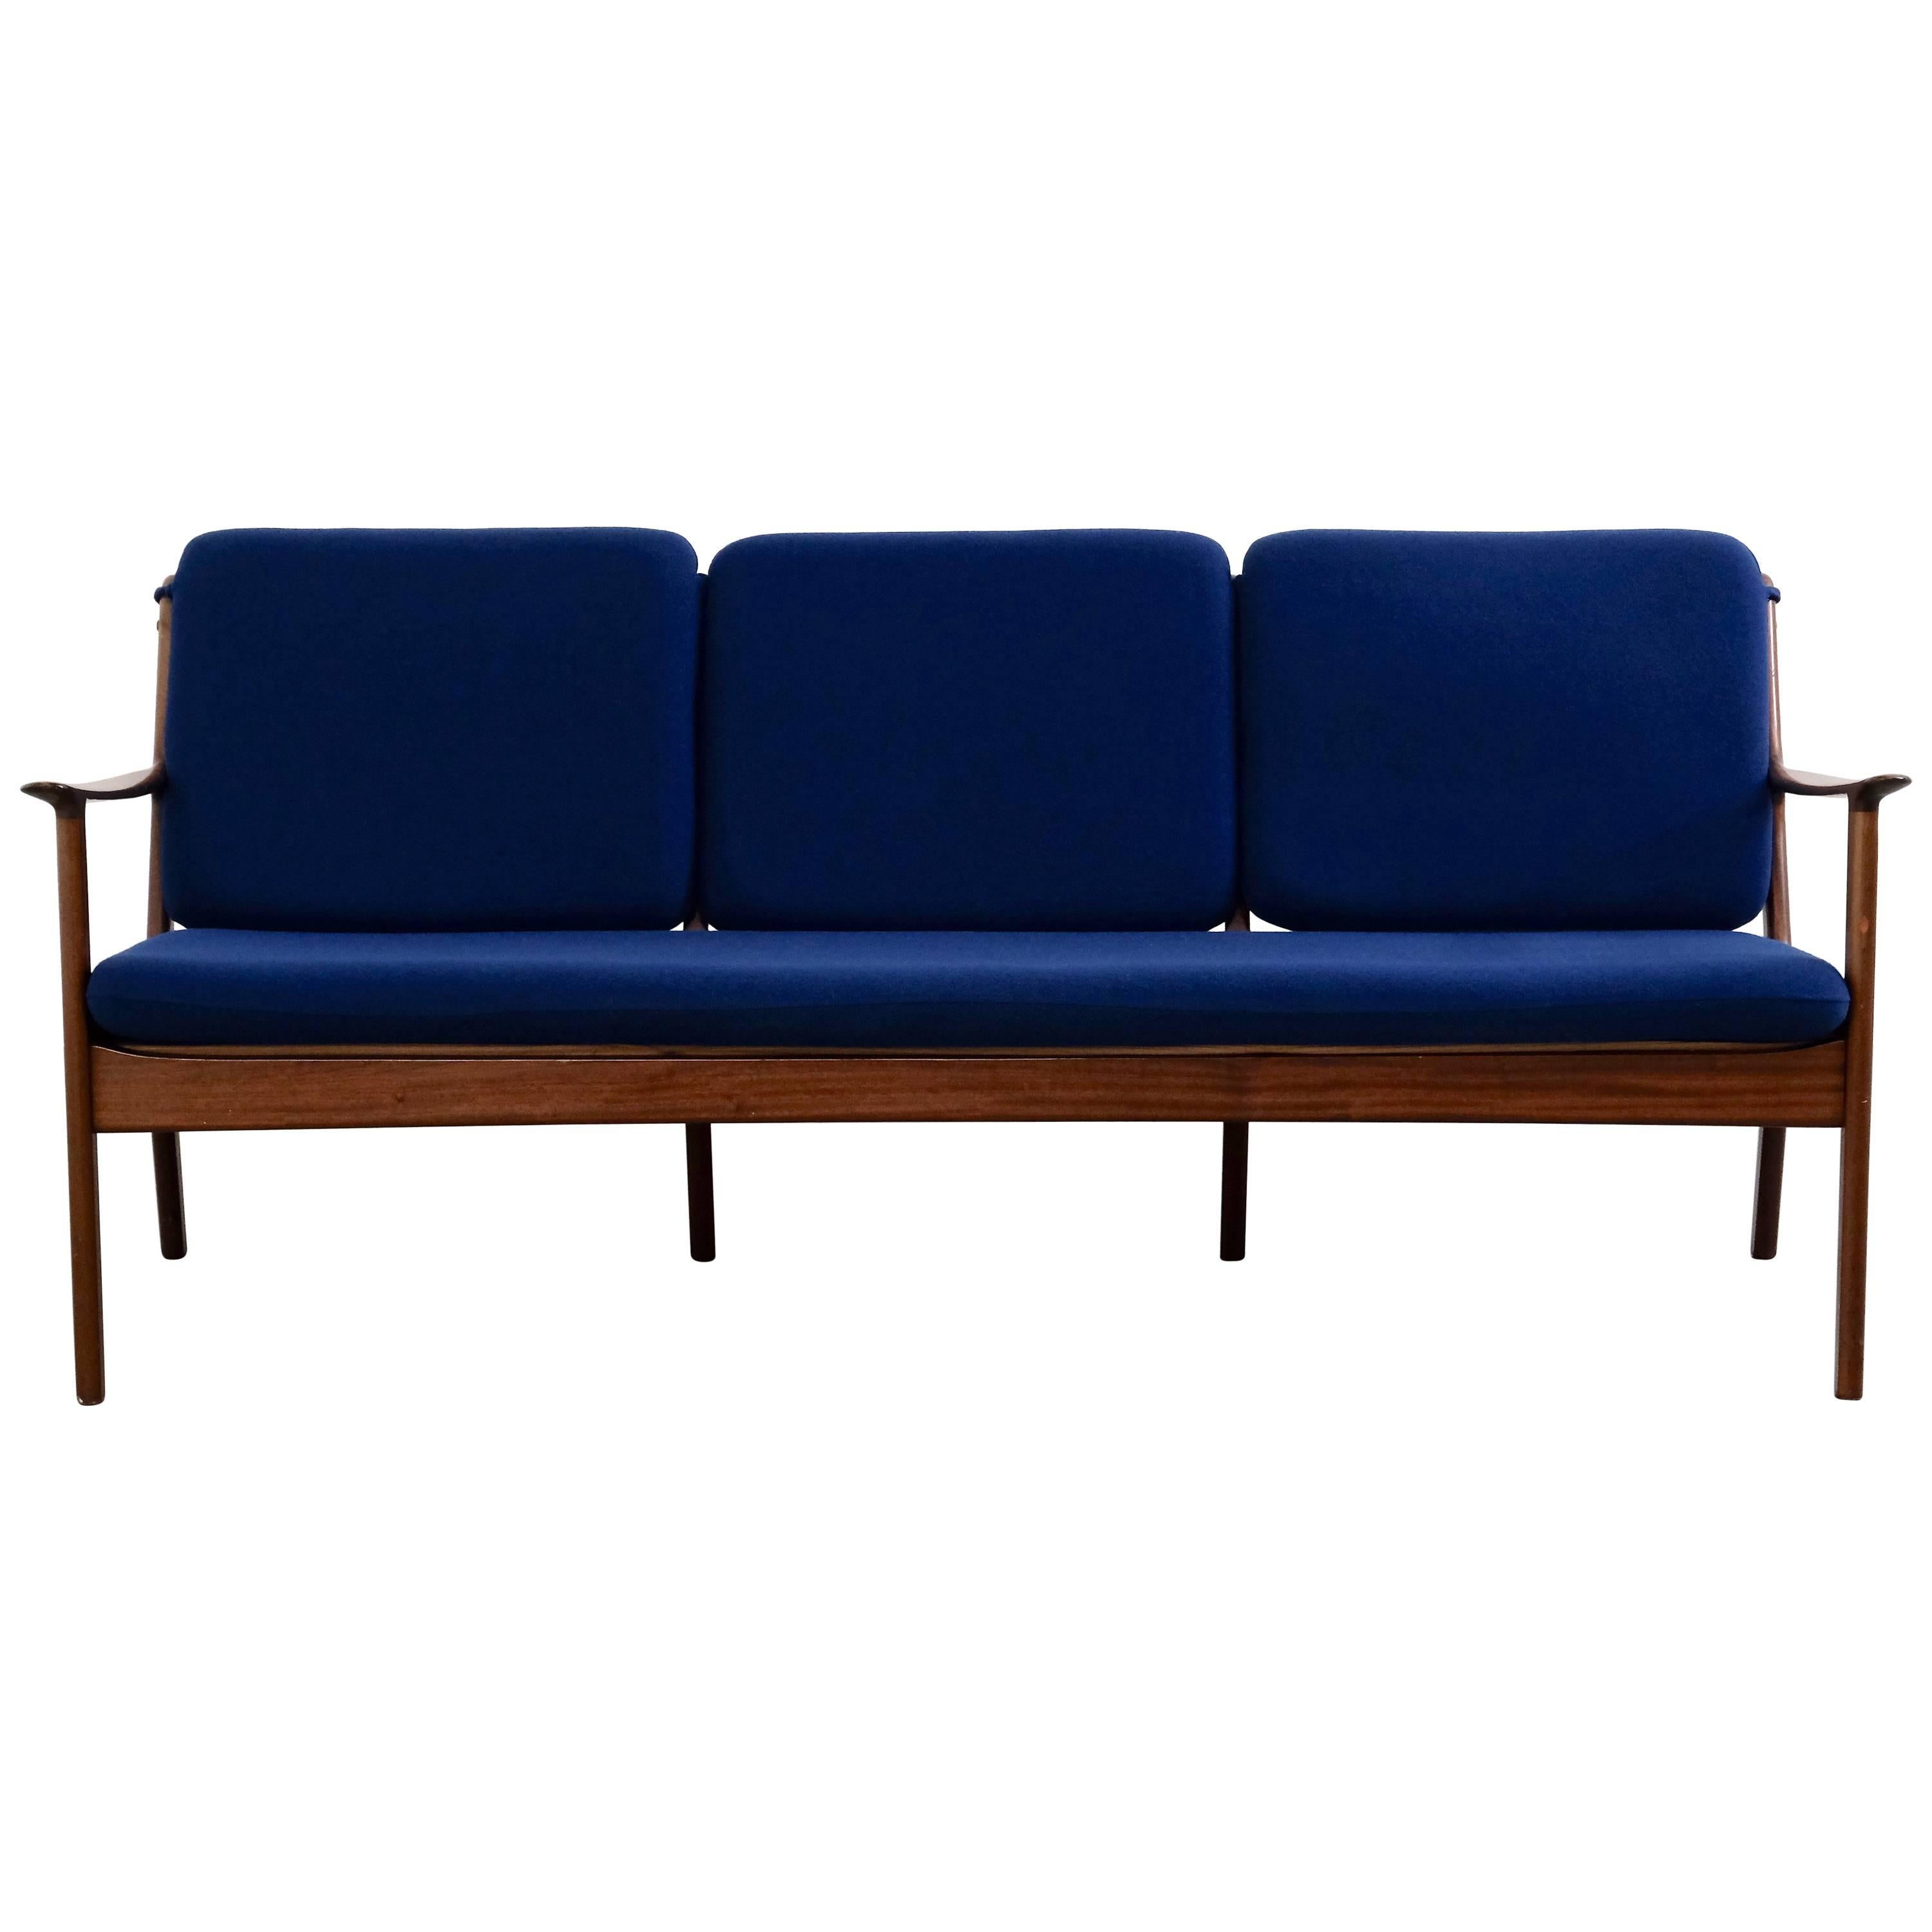 Three-Seat Mahogany Sofa by Ole Wanscher for P. Jeppesens Møbelfabrik